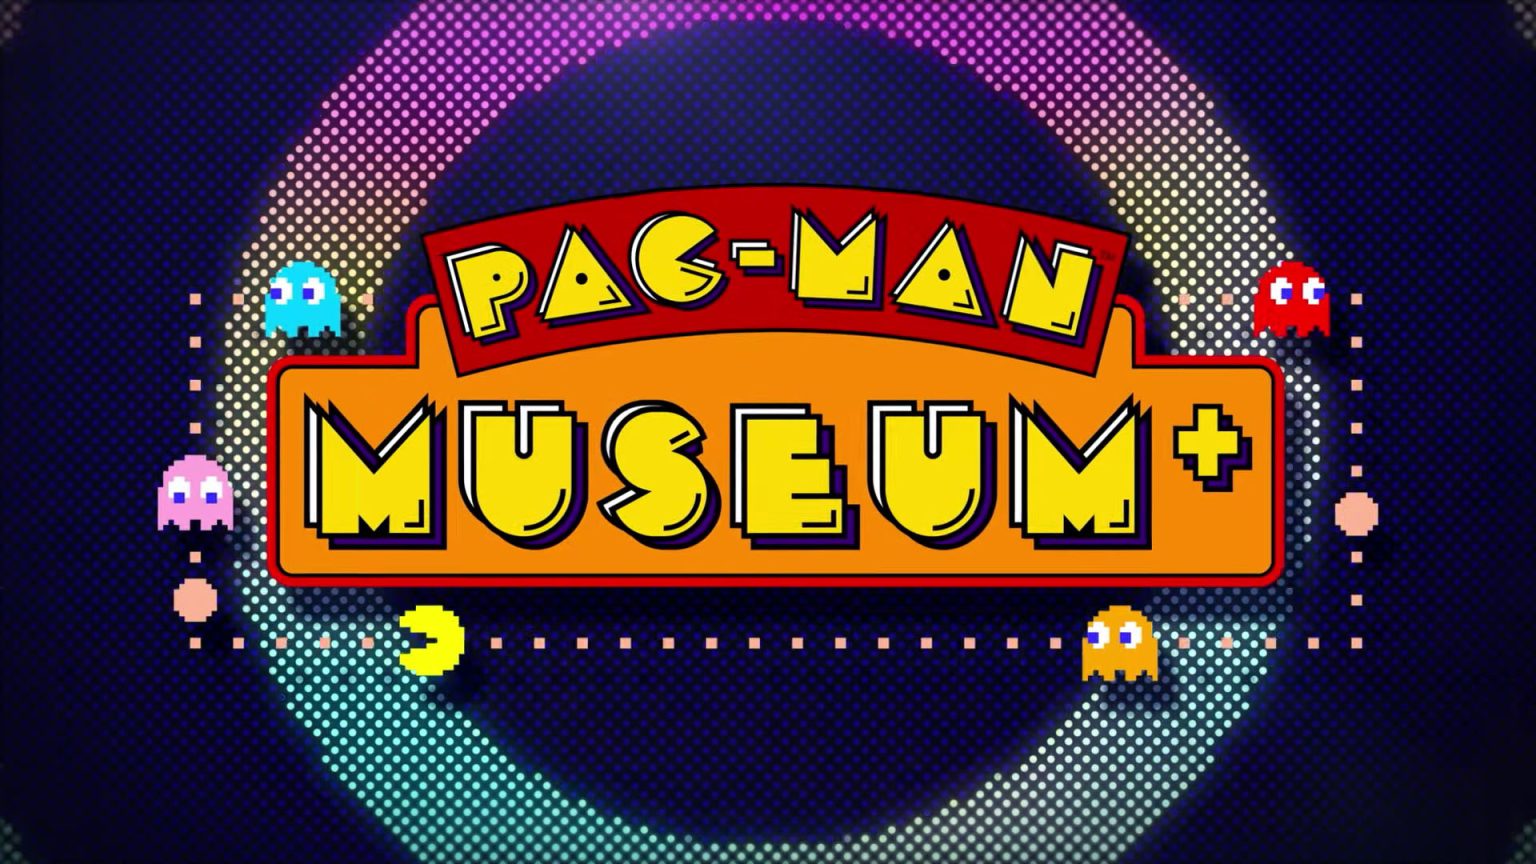 PAC MAN Museum plus